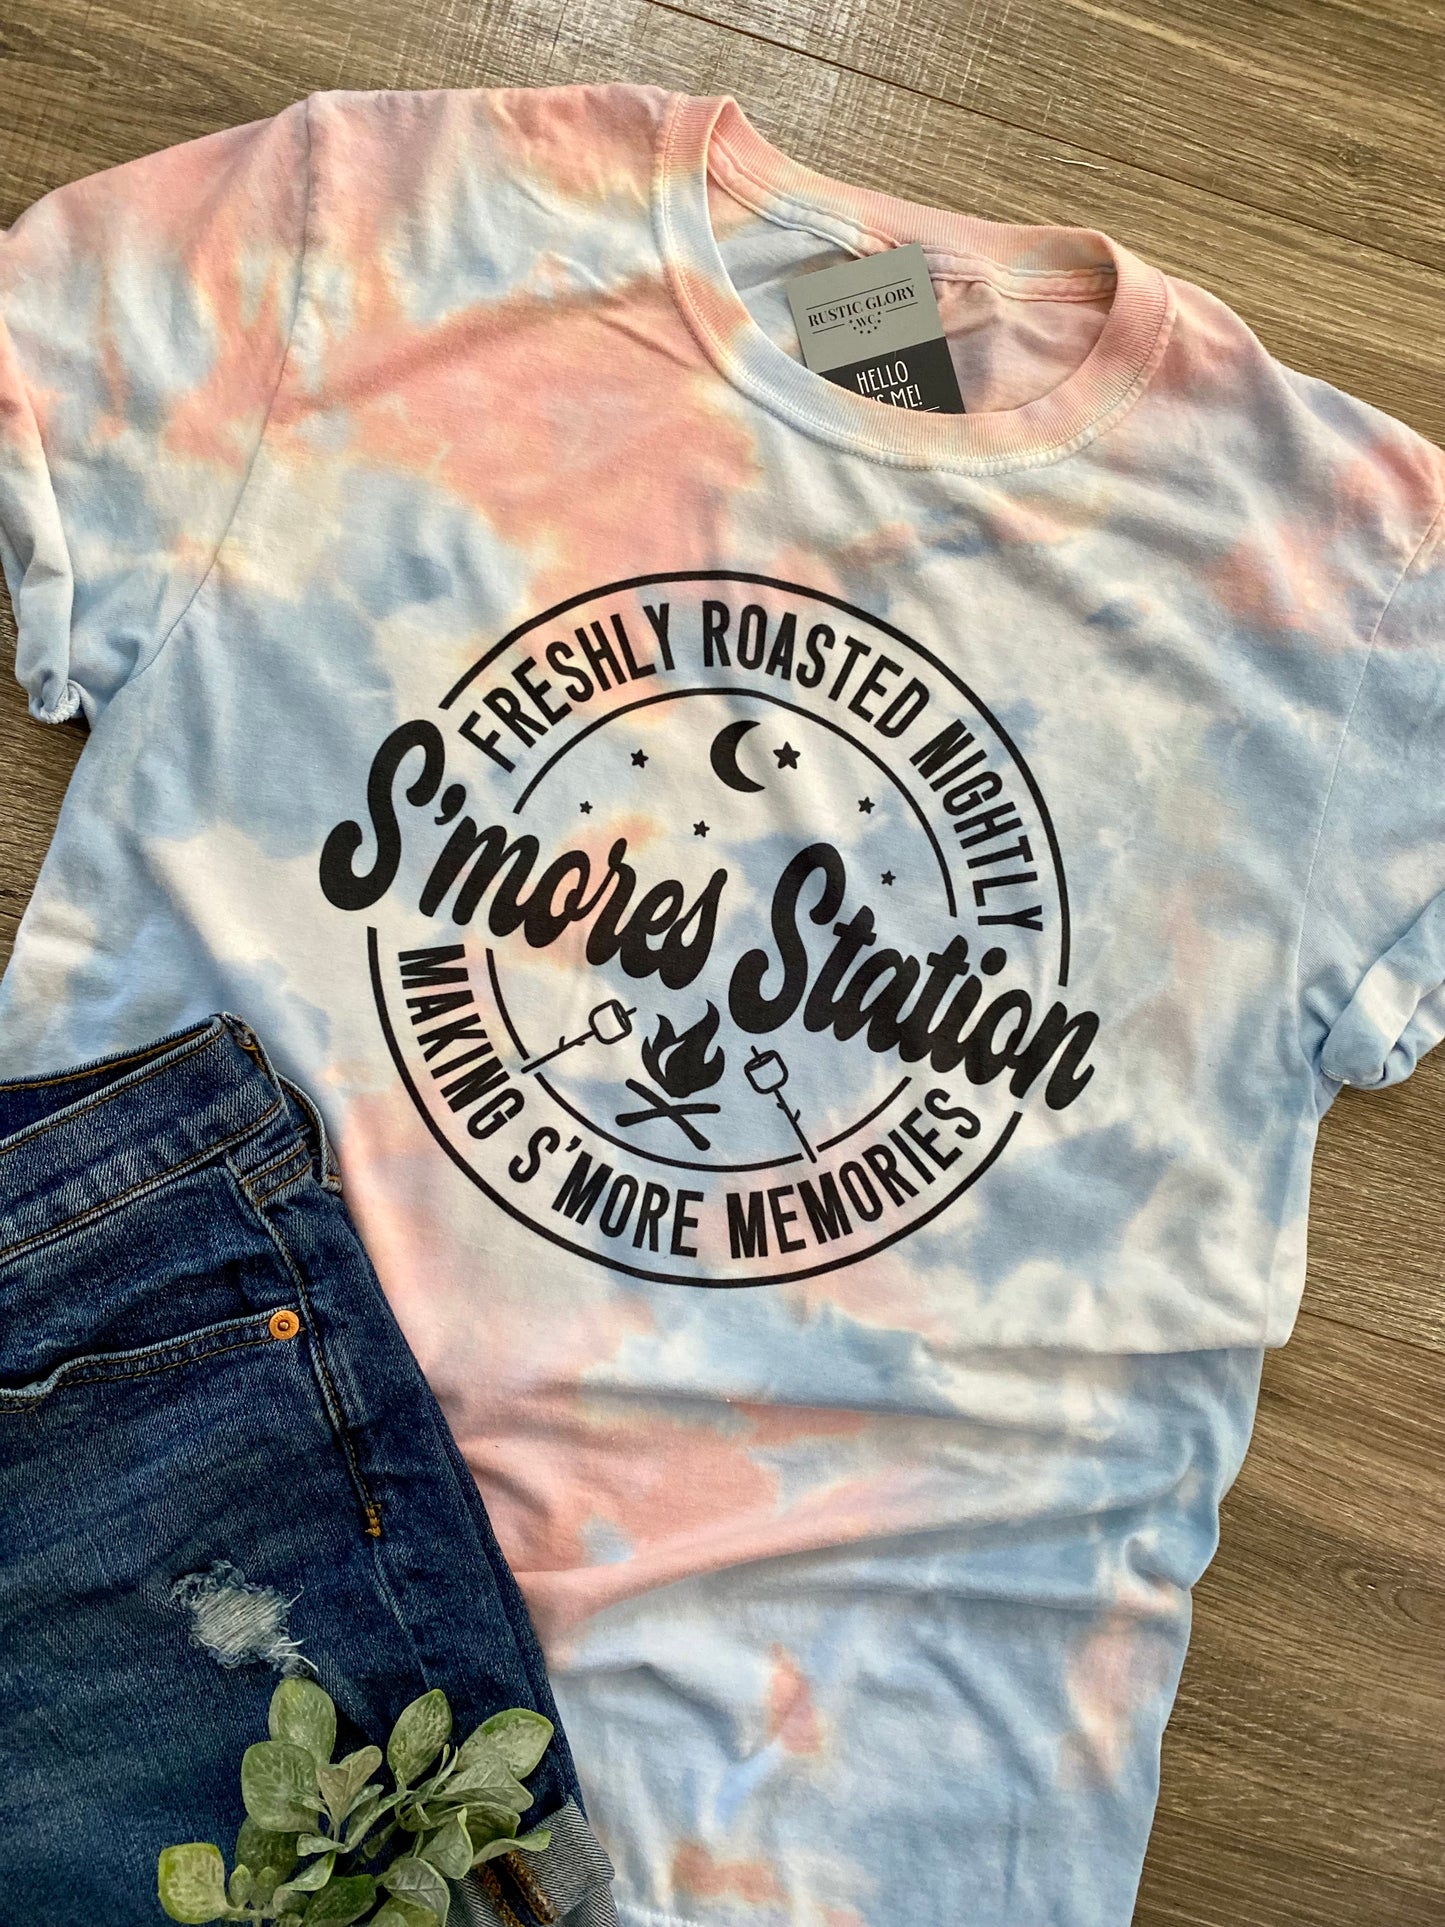 S'mores Station - Summer Shirt